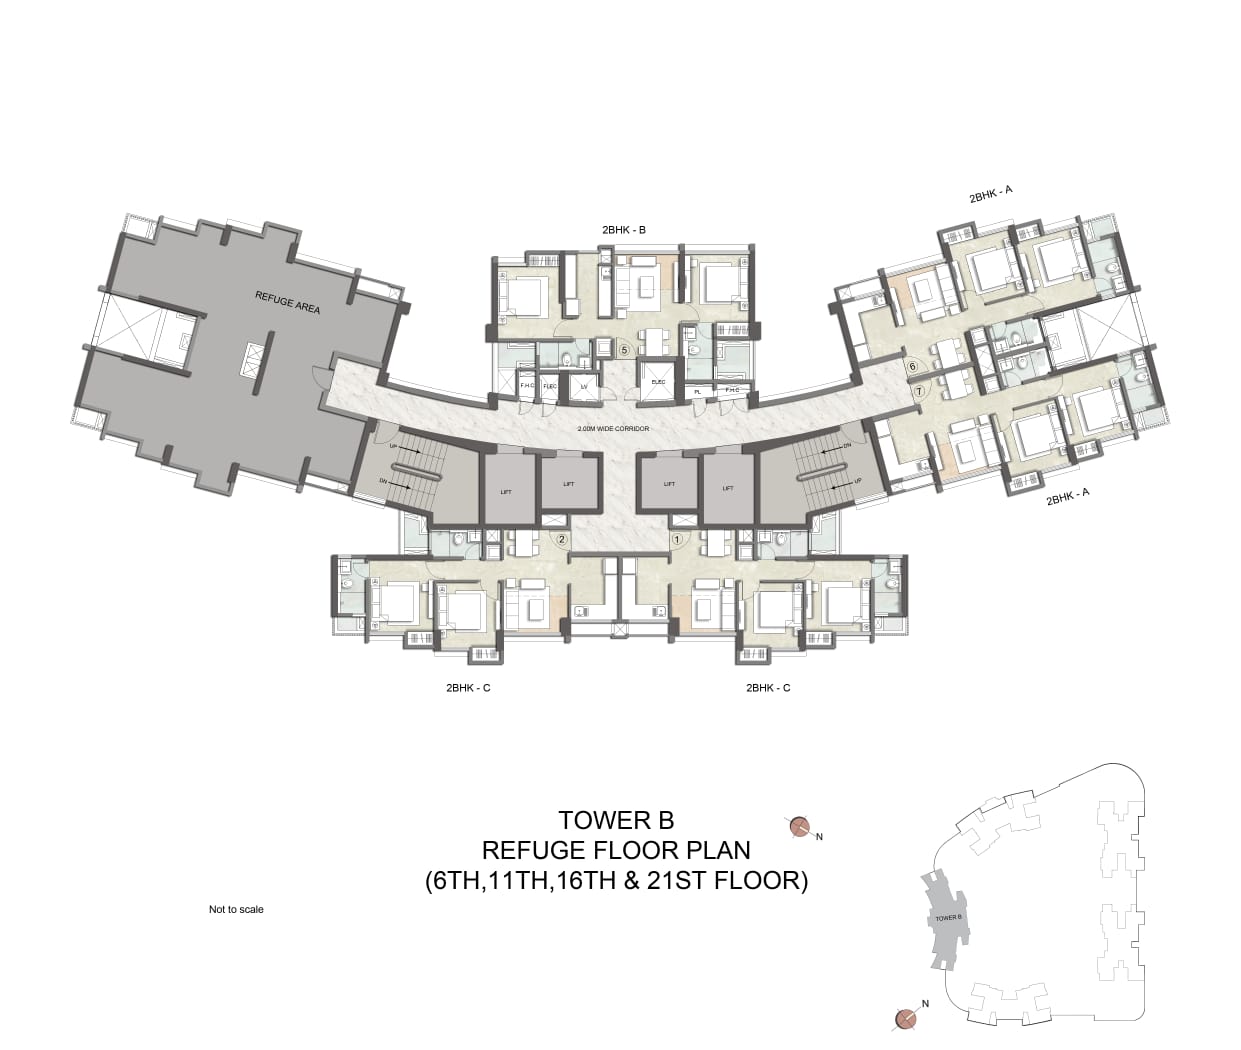 Refuge Floor Plan – Tower B